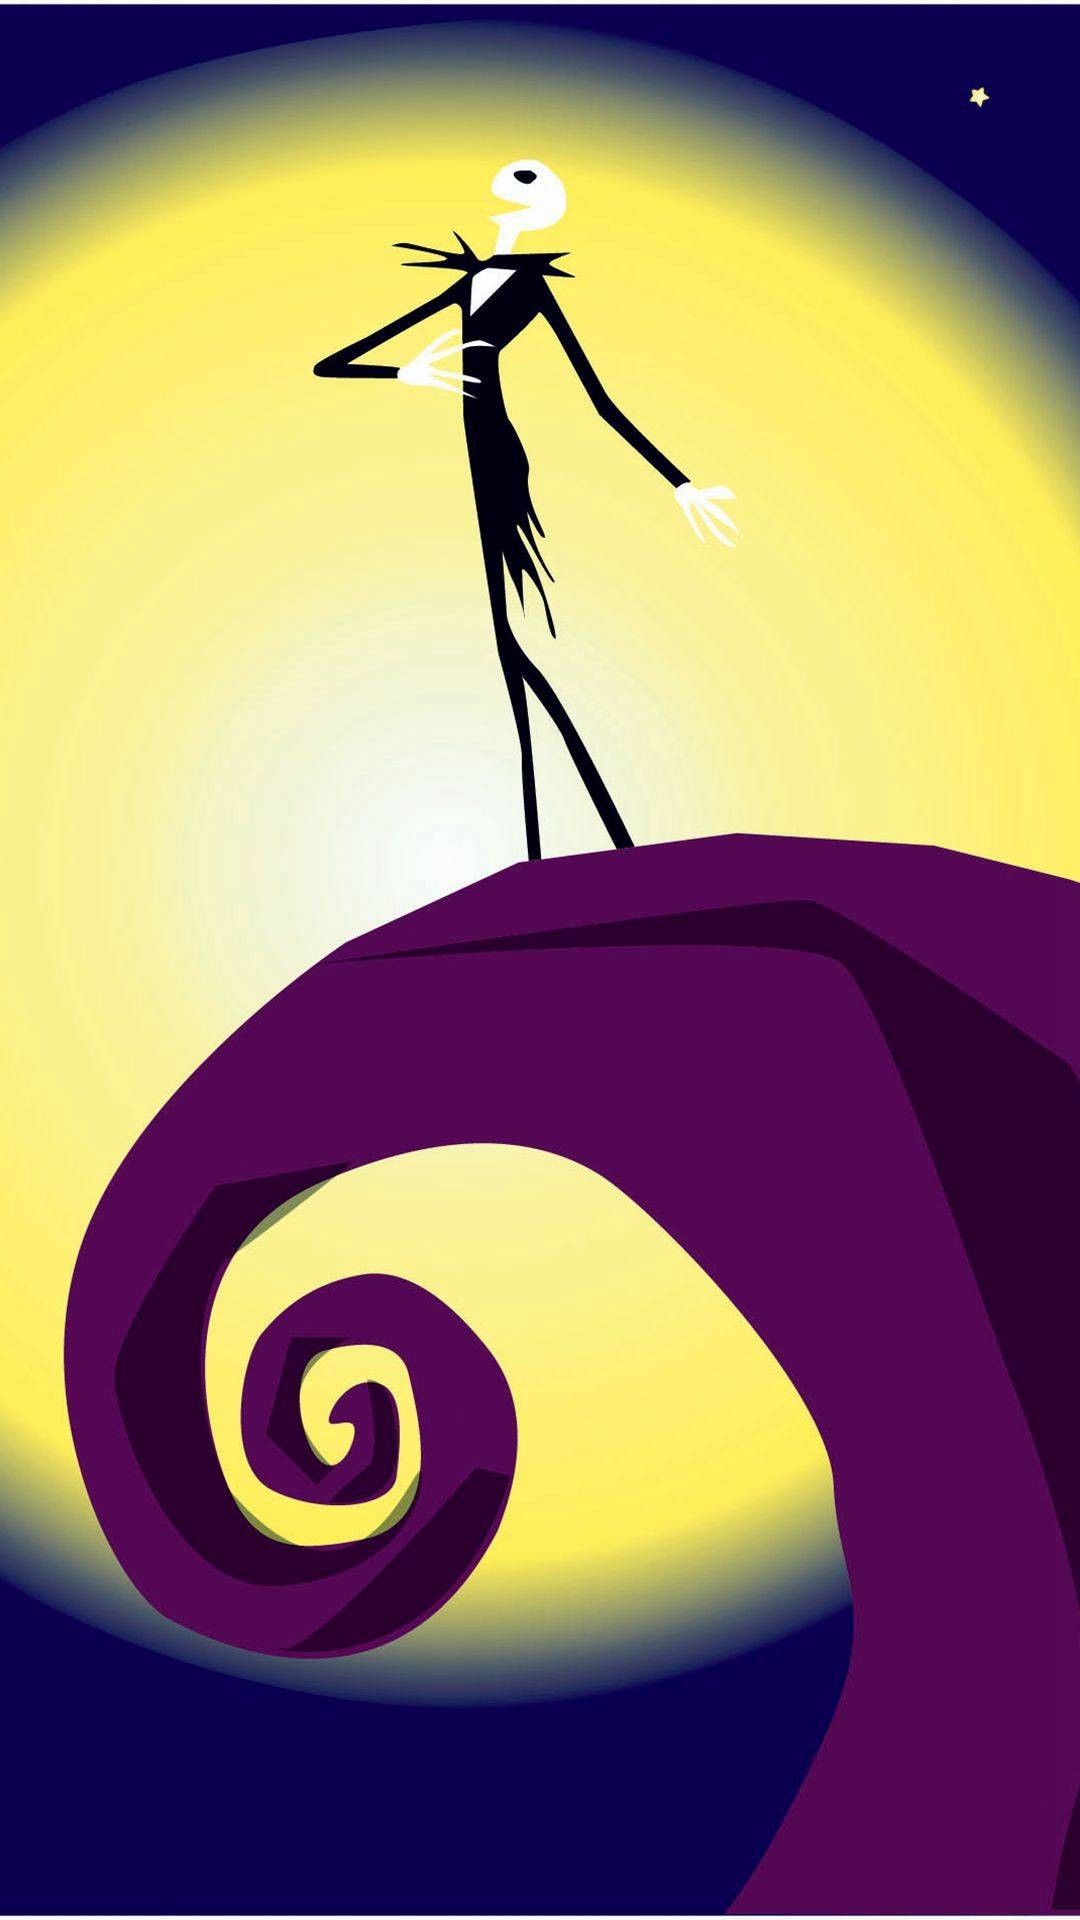 oogie boogie wallpaper,purple,violet,animated cartoon,illustration,graphic design